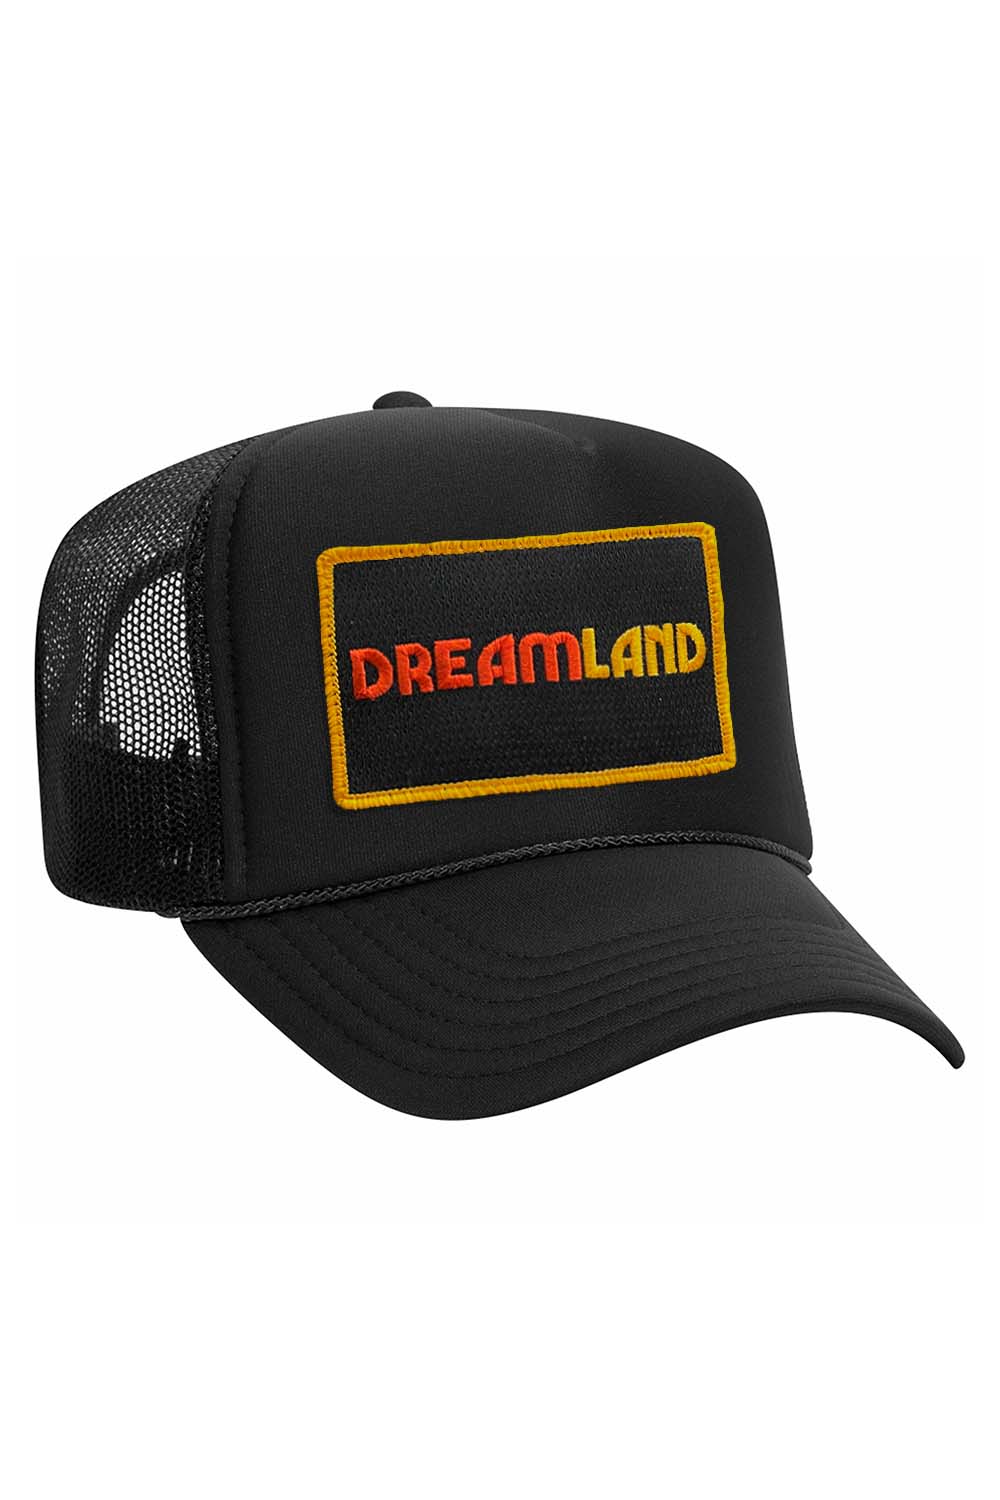 DREAMLAND LOGO VINTAGE TRUCKER HAT - BLACK – Aviator Nation Dreamland